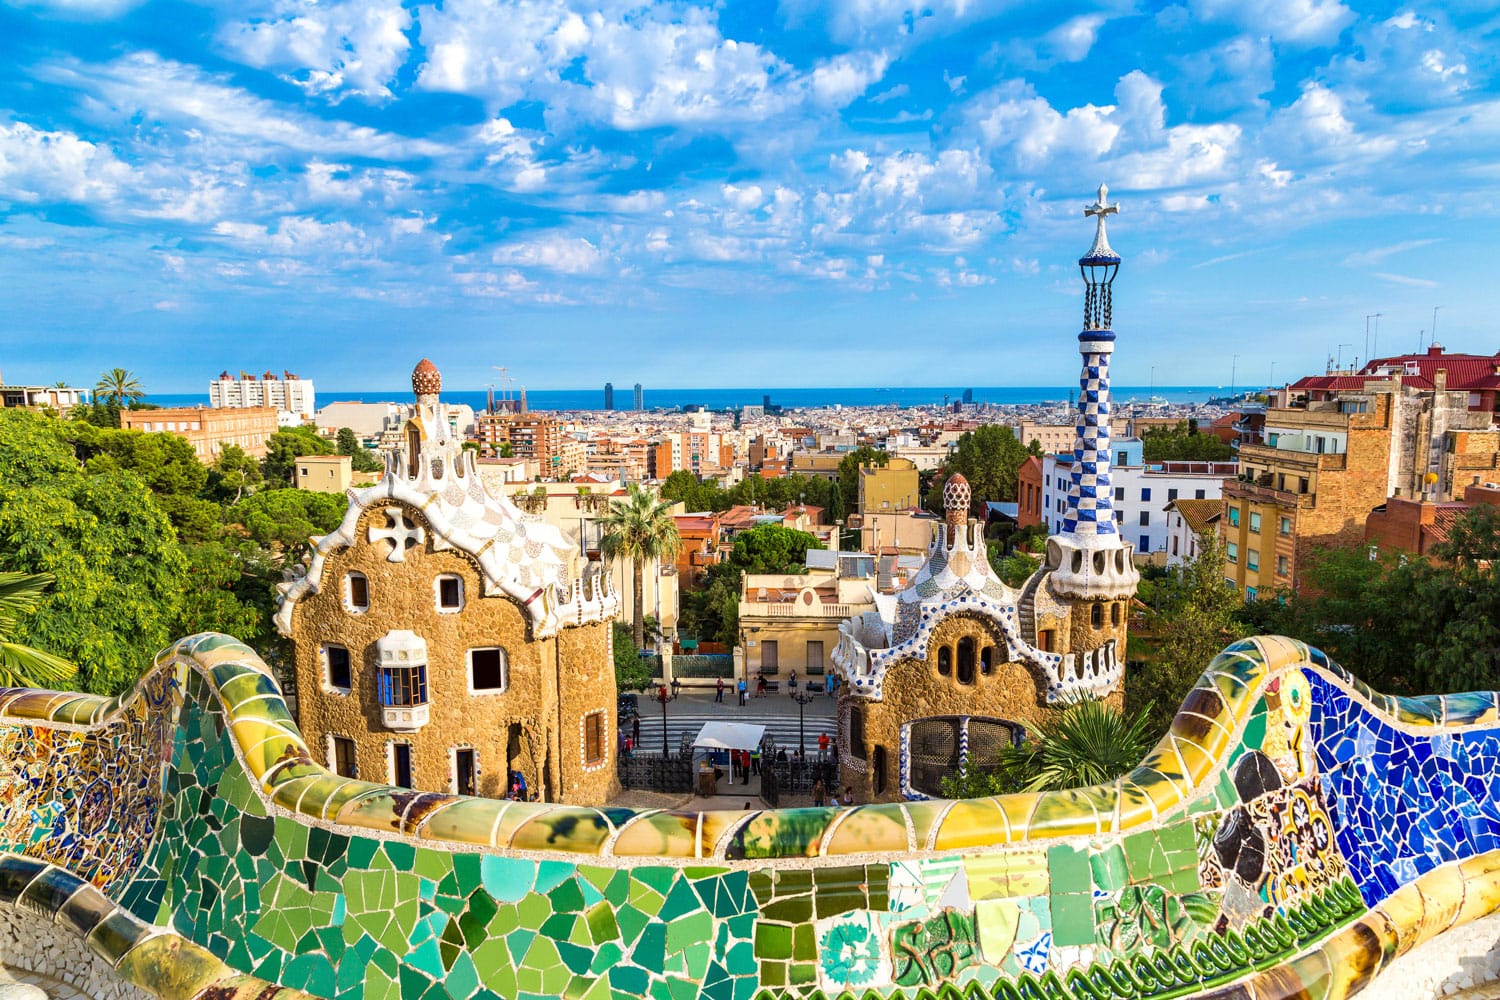 Park Guell από τον αρχιτέκτονα Gaudi σε μια καλοκαιρινή μέρα στη Βαρκελώνη, Ισπανία.